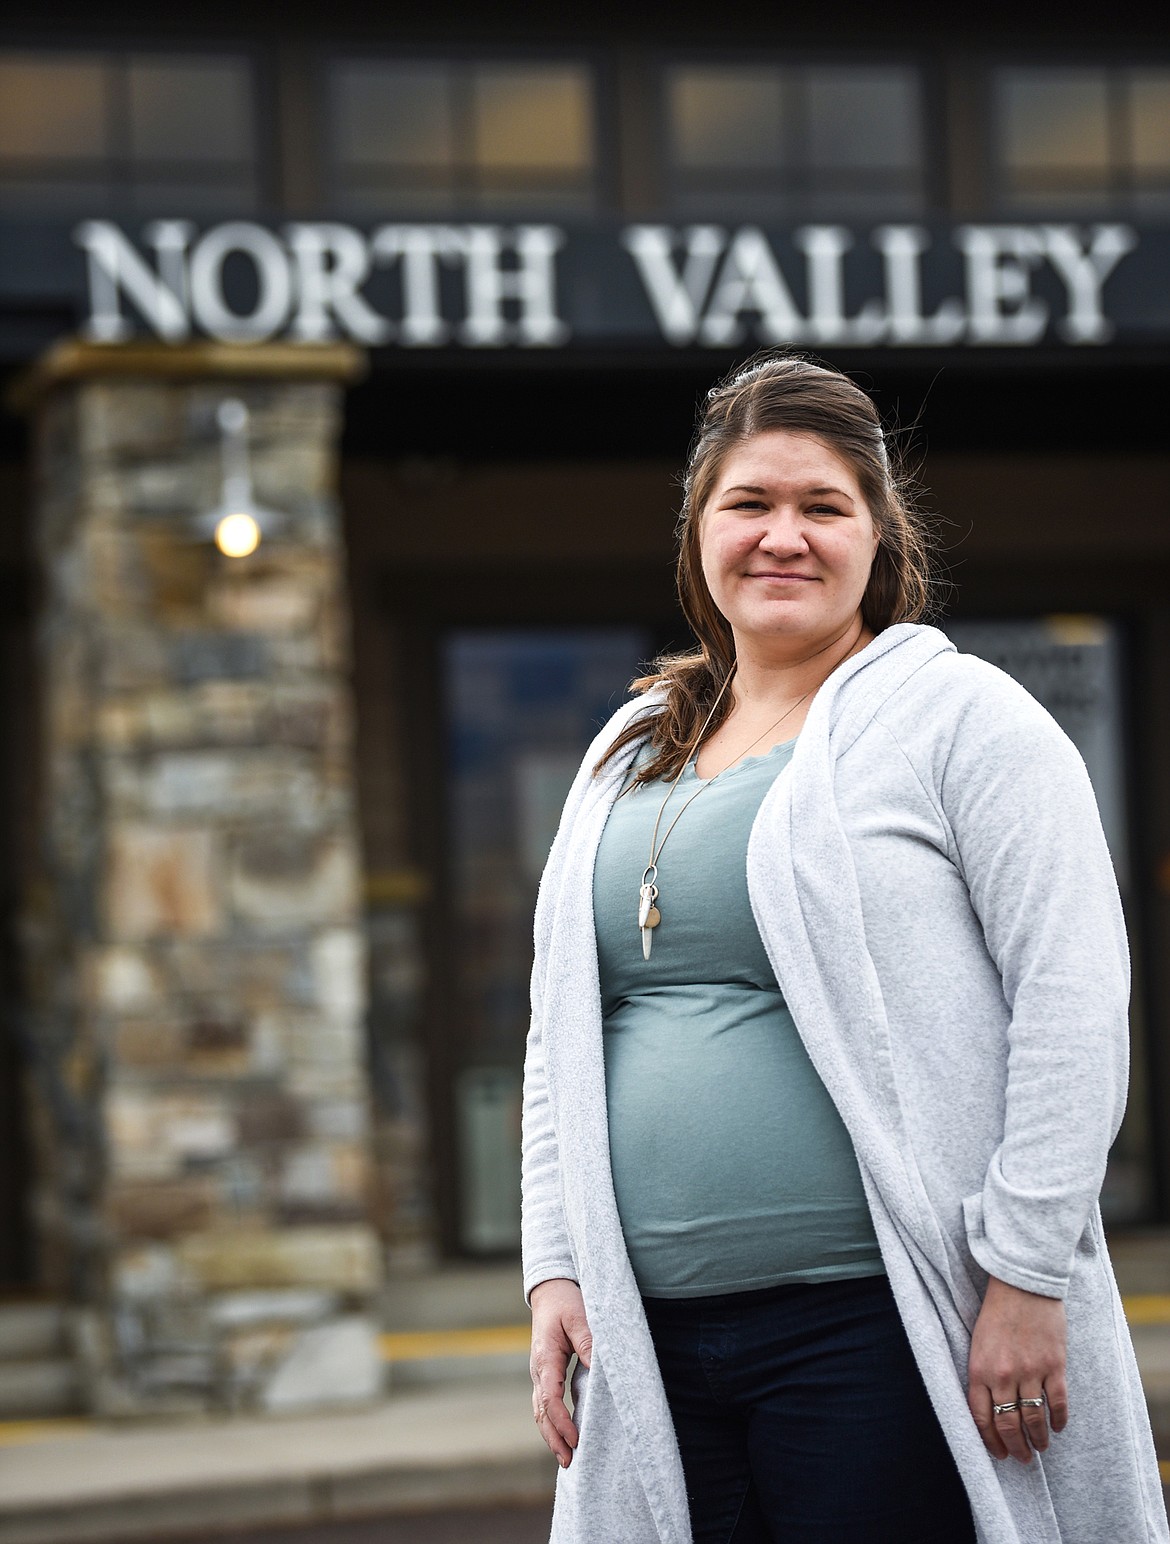 Jessy Lee at North Valley Food Bank on Friday, Nov. 20. (Casey Kreider/Daily Inter Lake)